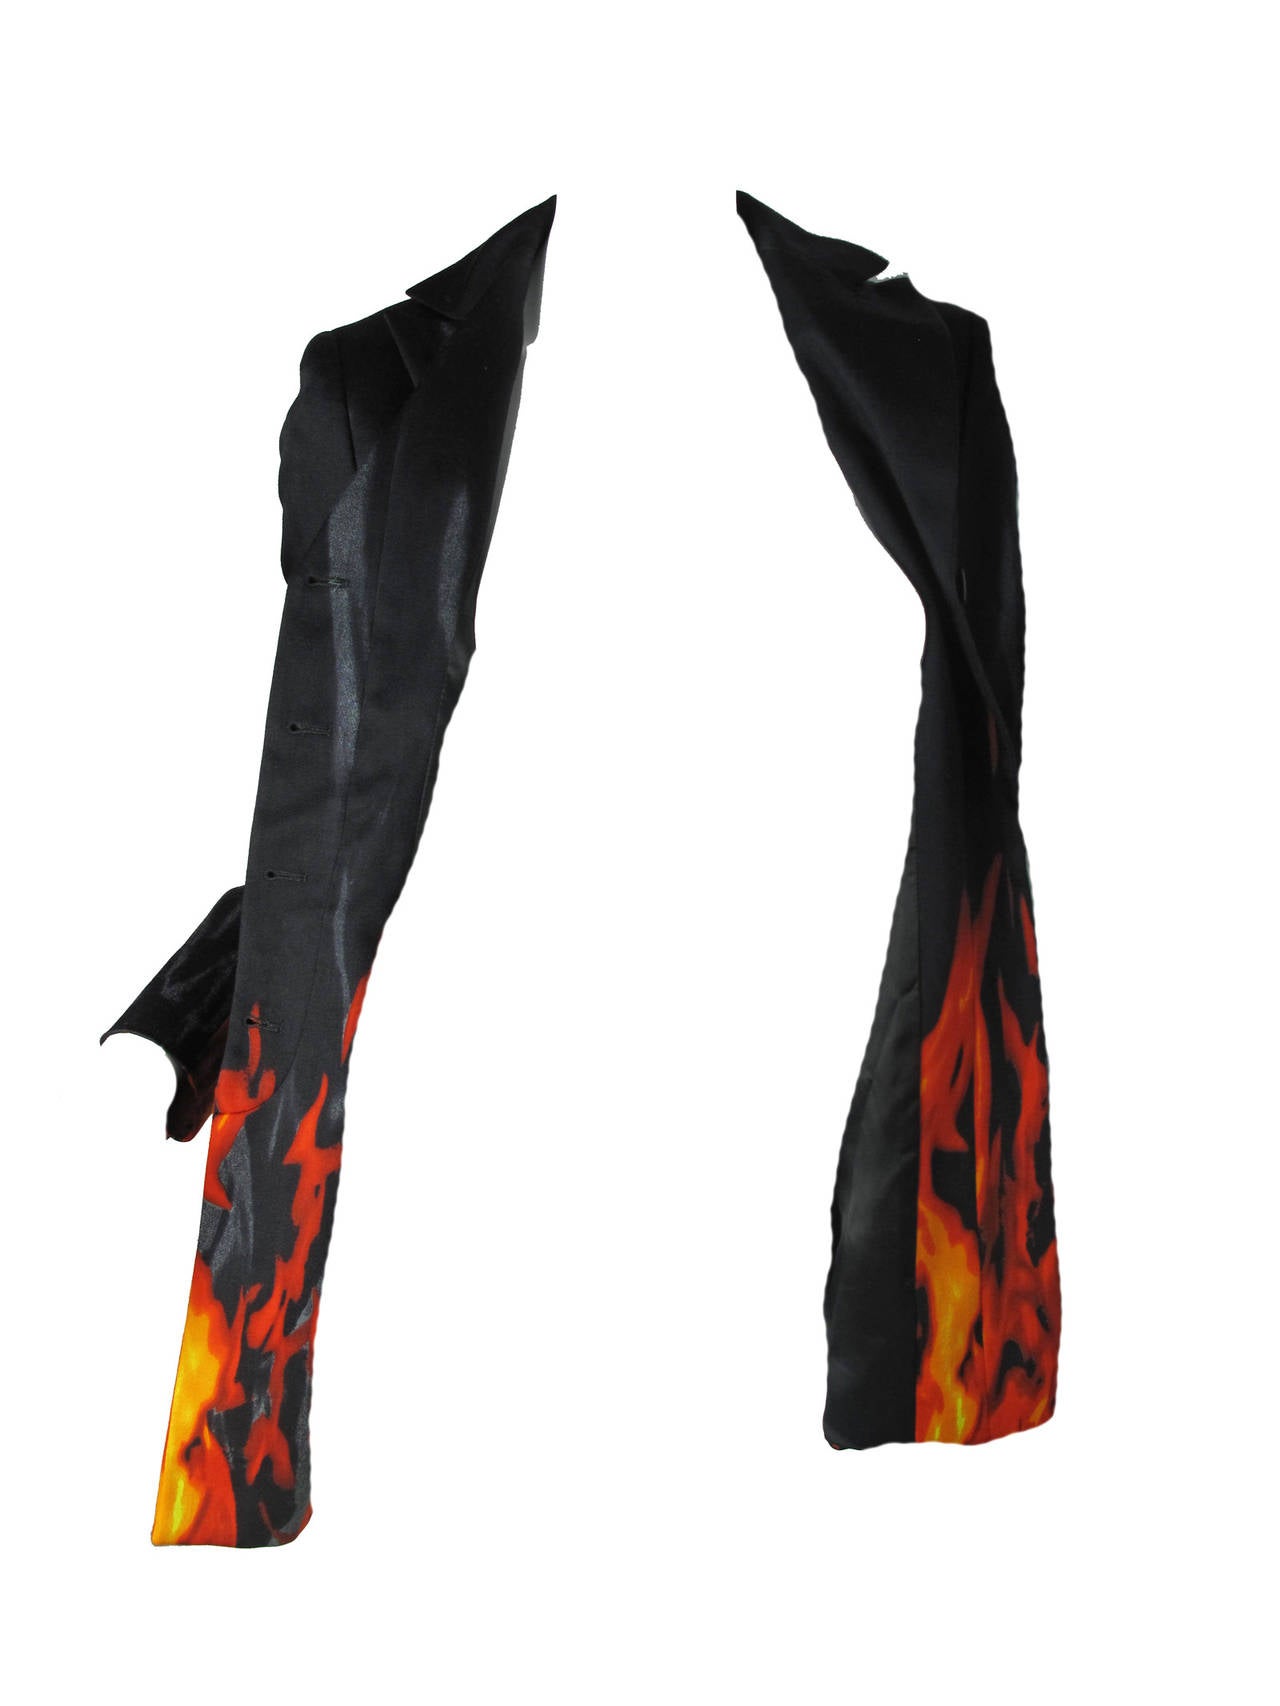 Moschino black light wool blazer with flame and smoke print.  32